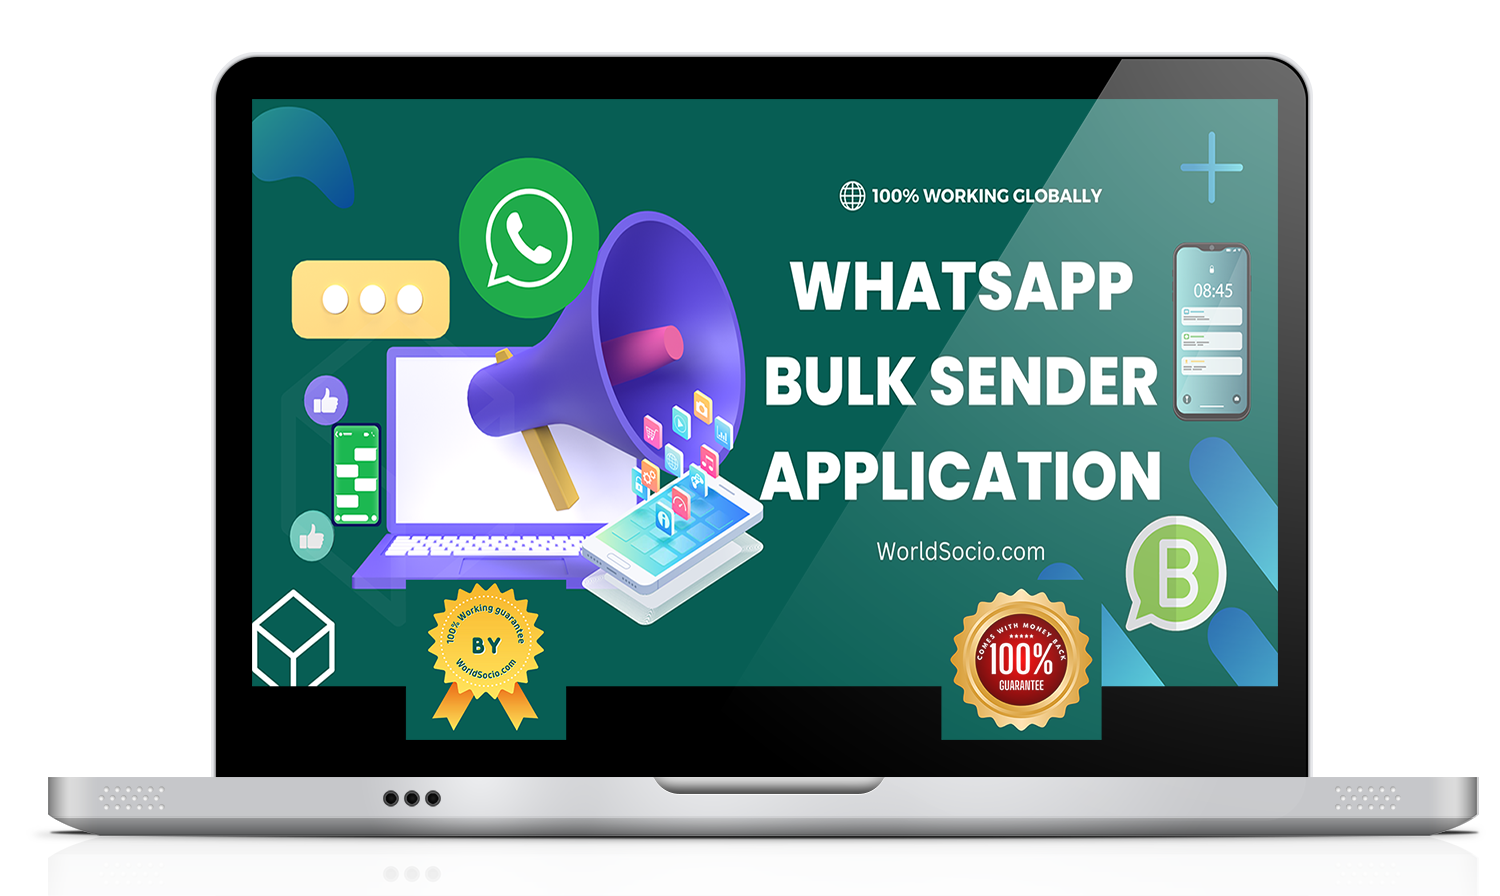 whatsapp-bulk-sender-application-2-png.1274